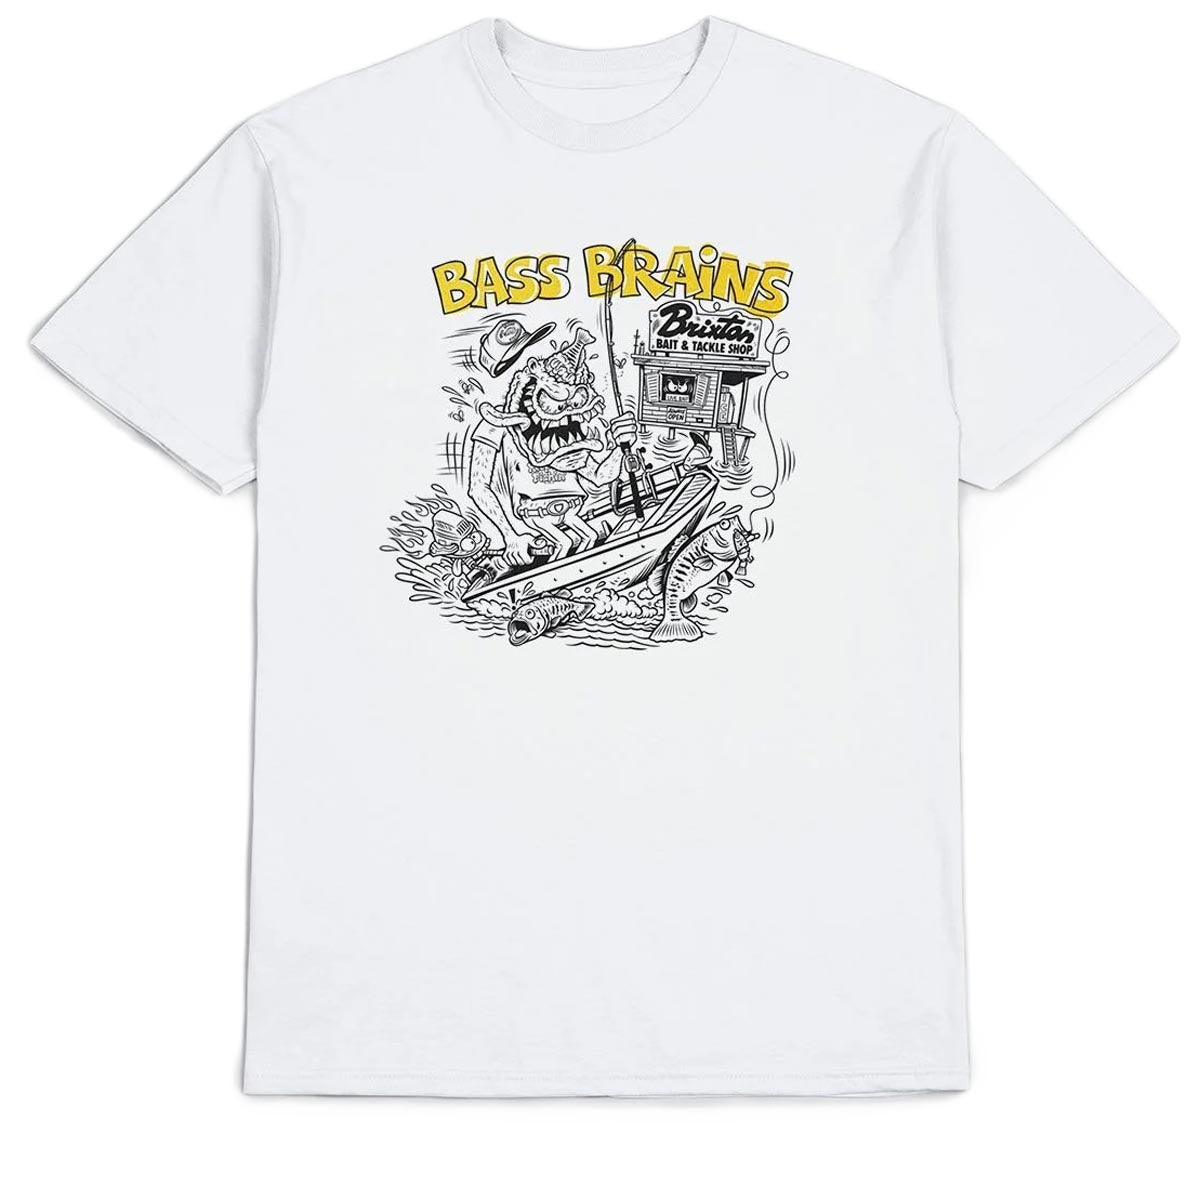 Brixton Bass Brains Monster T-Shirt - White image 1